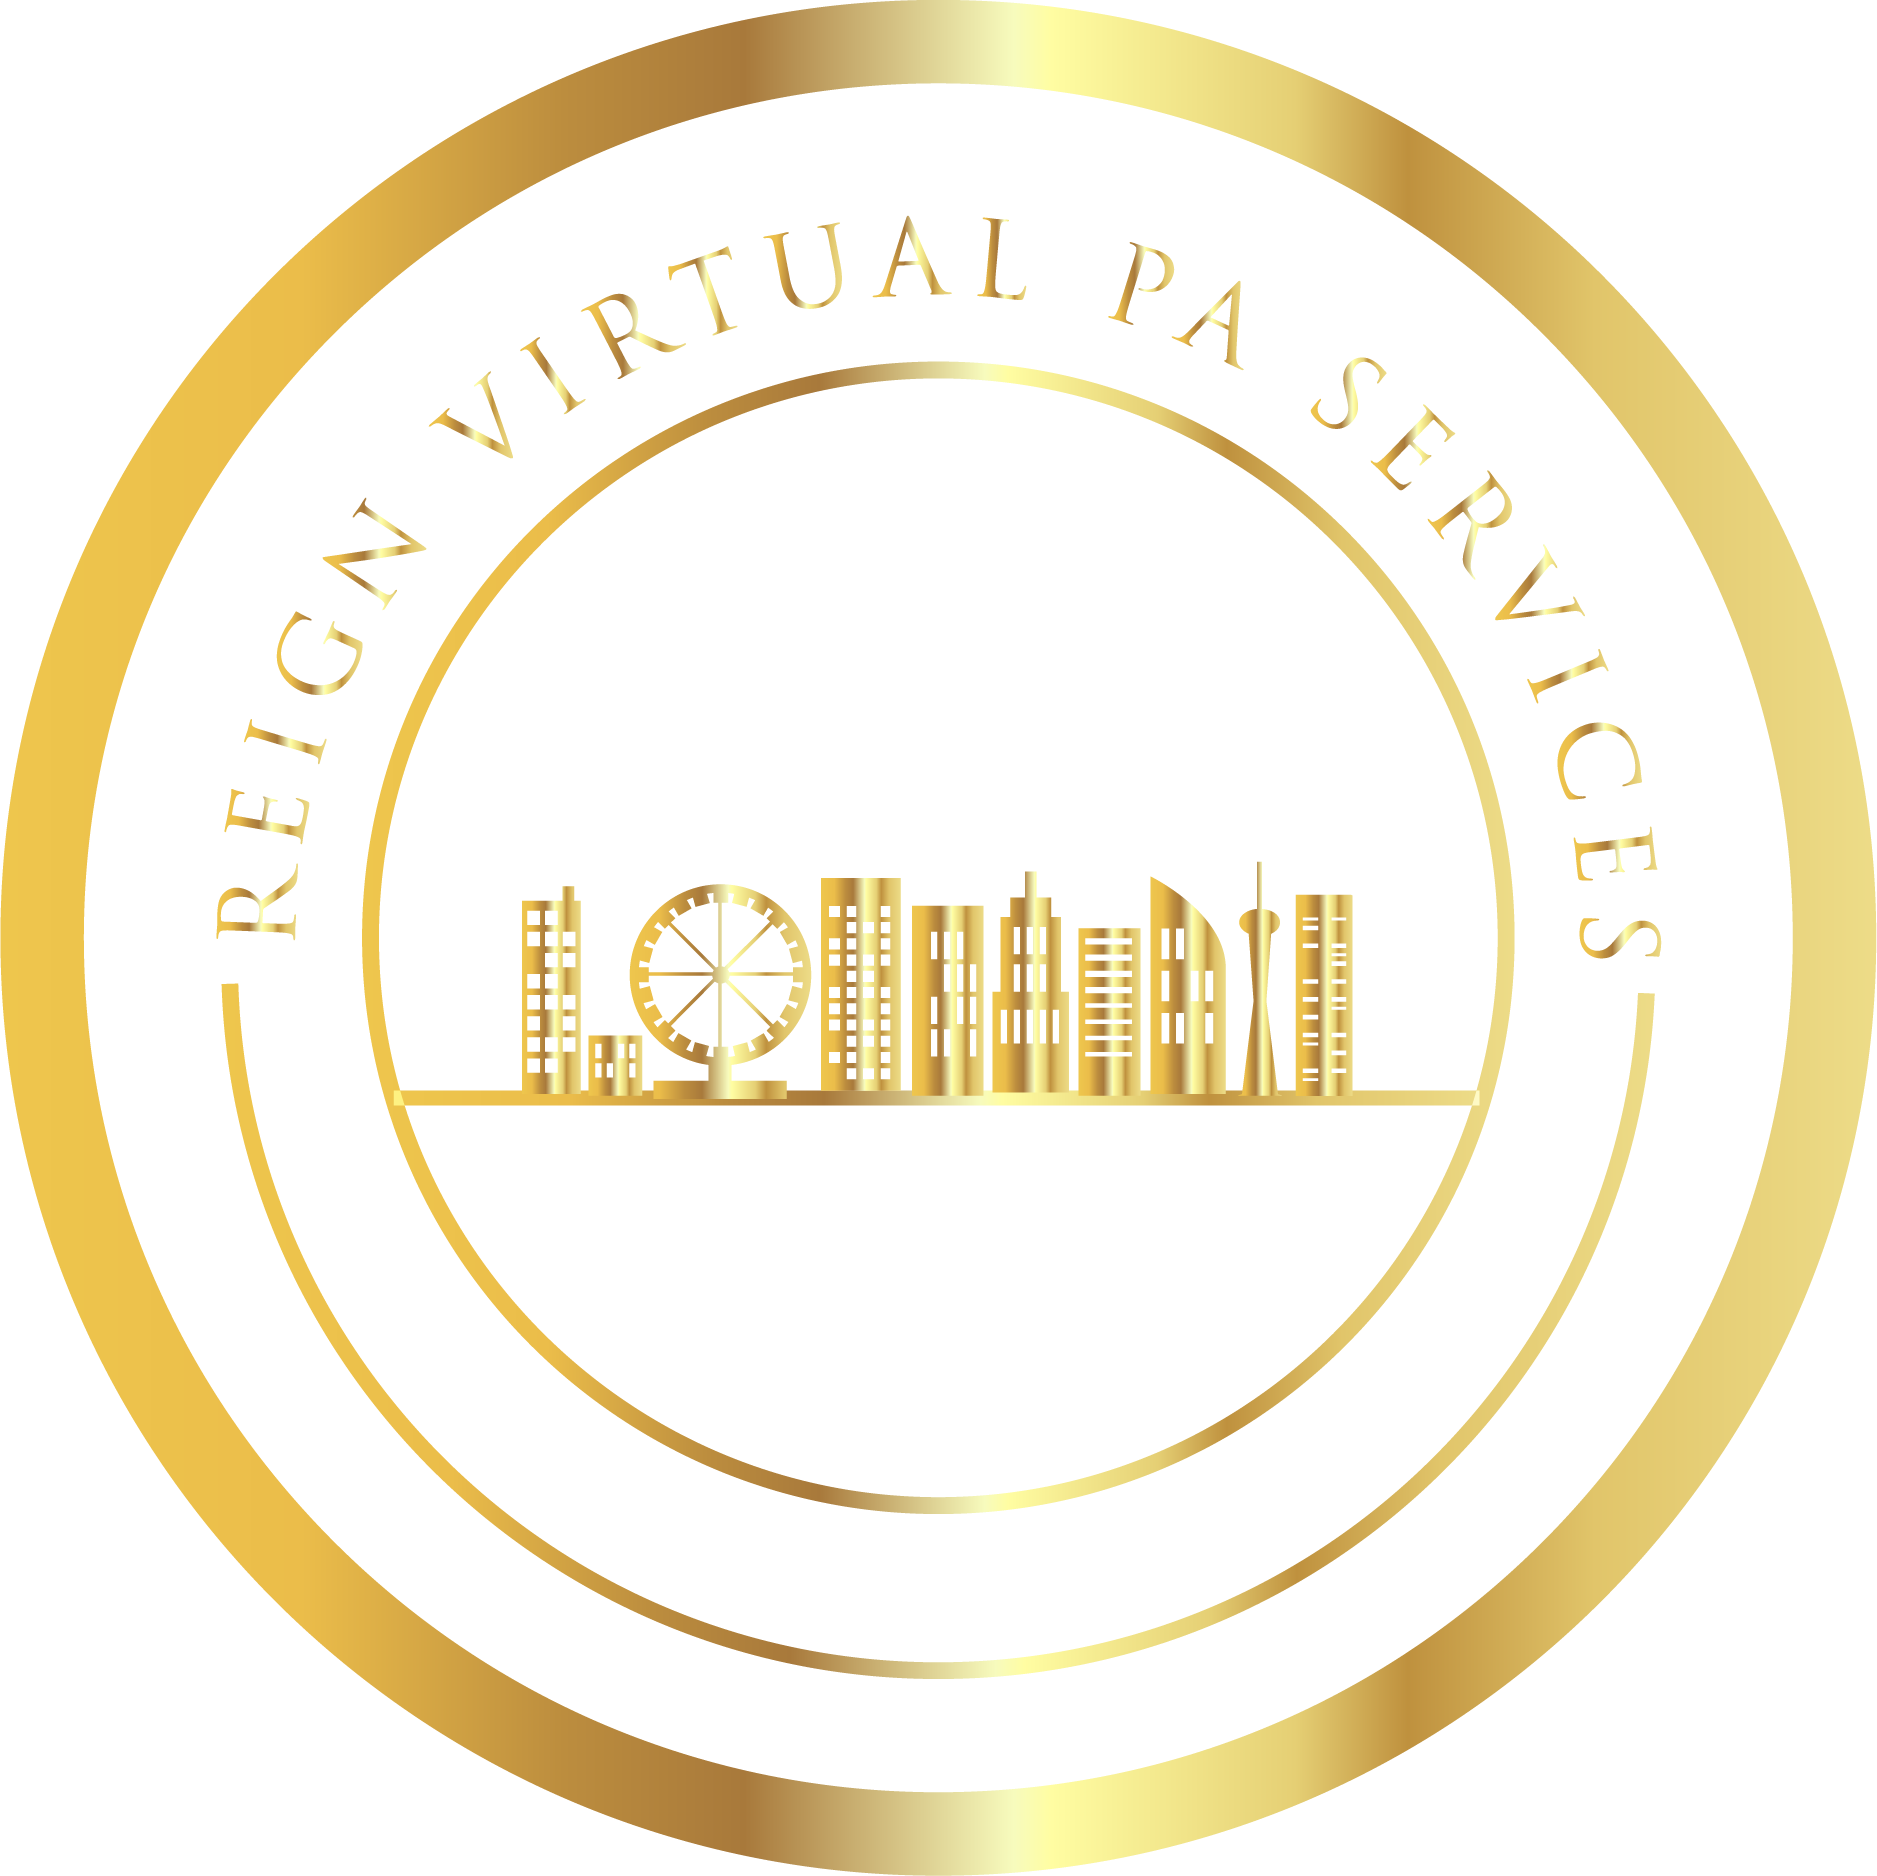 Reign Virtual PA Services